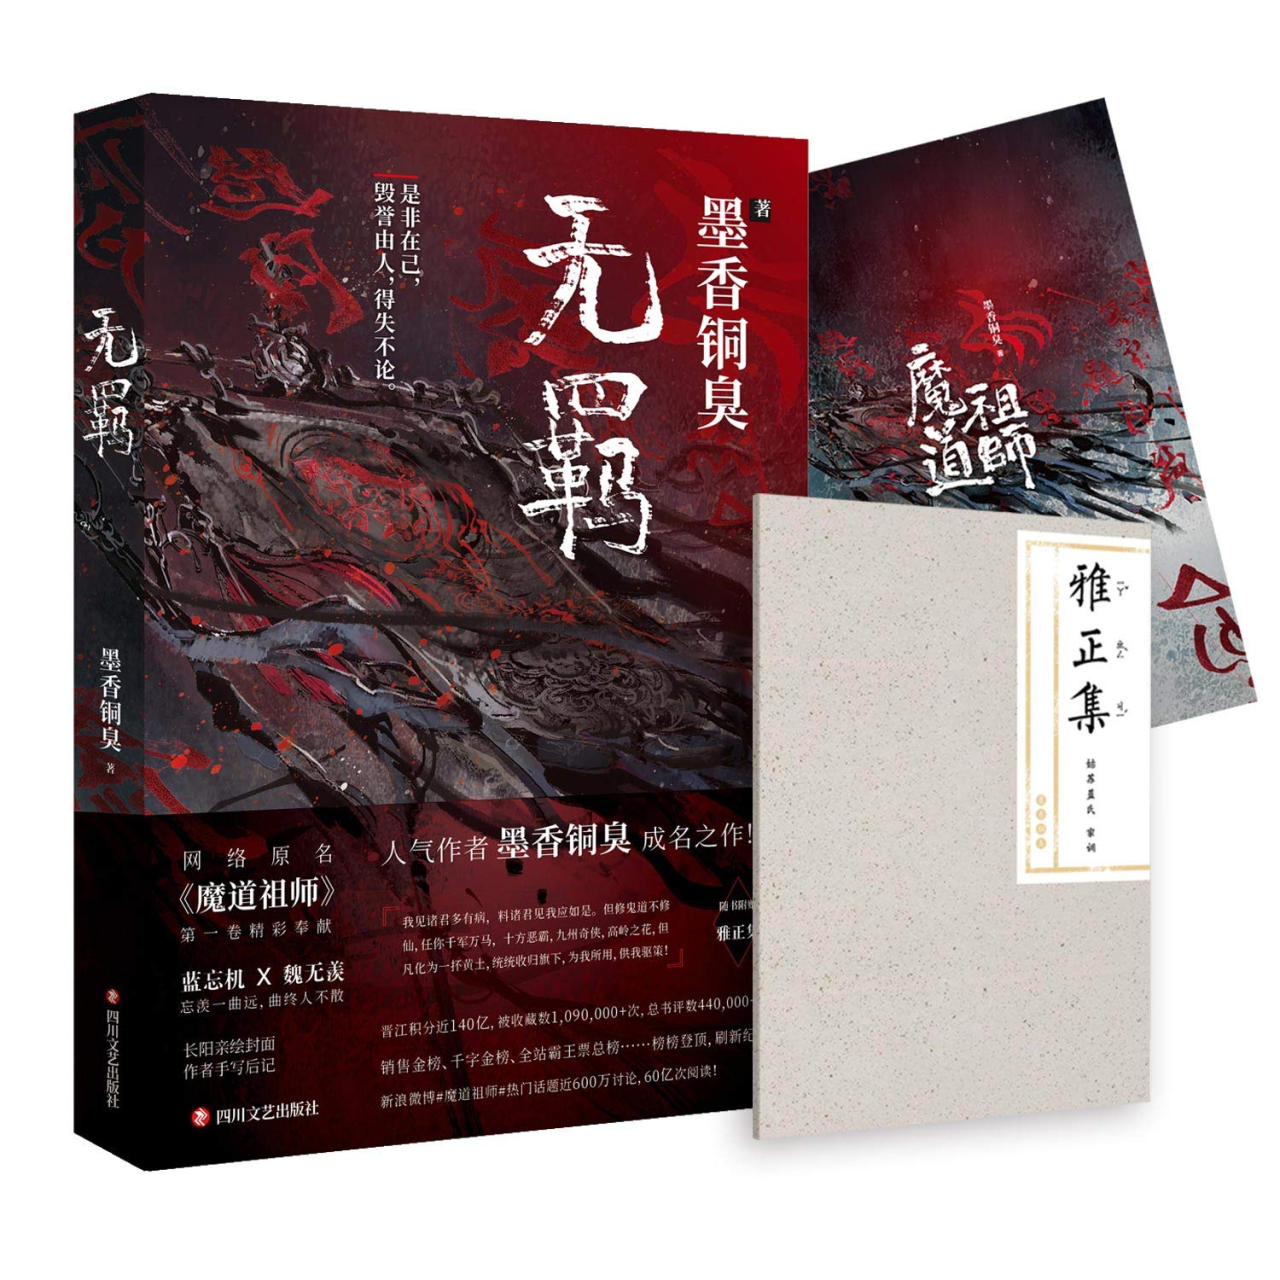 Details about   Grandmaster of Demonic Cultivation Original Wuxian Picture Book Album Artbook Sa 